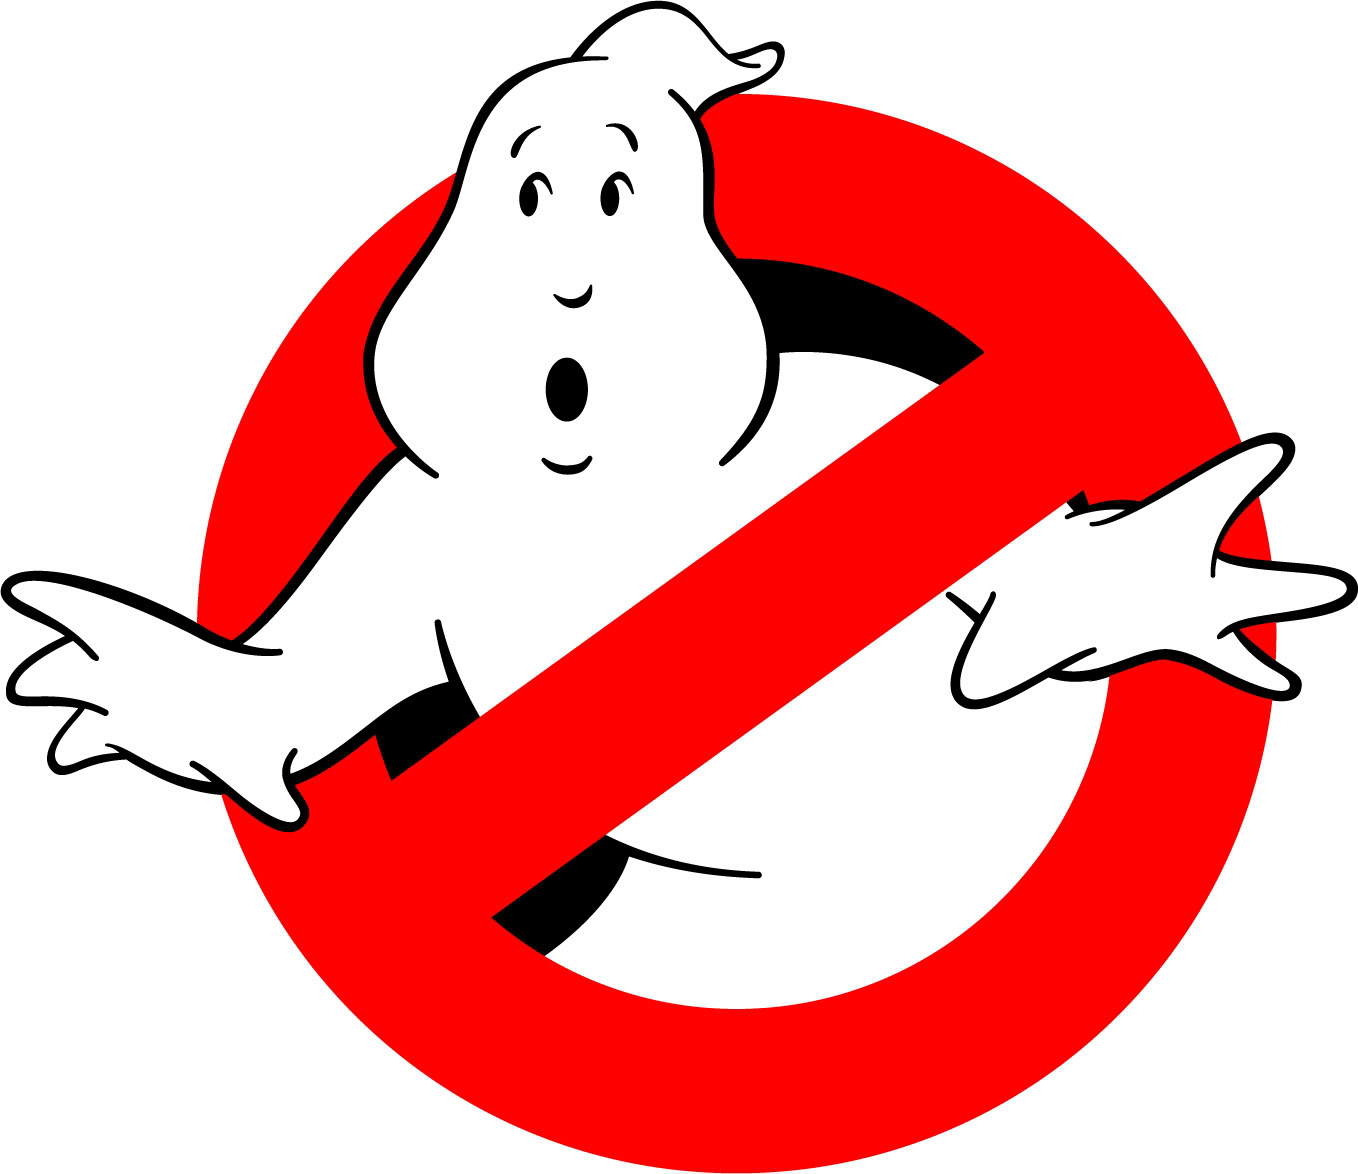 ghostbuster-logo.jpg